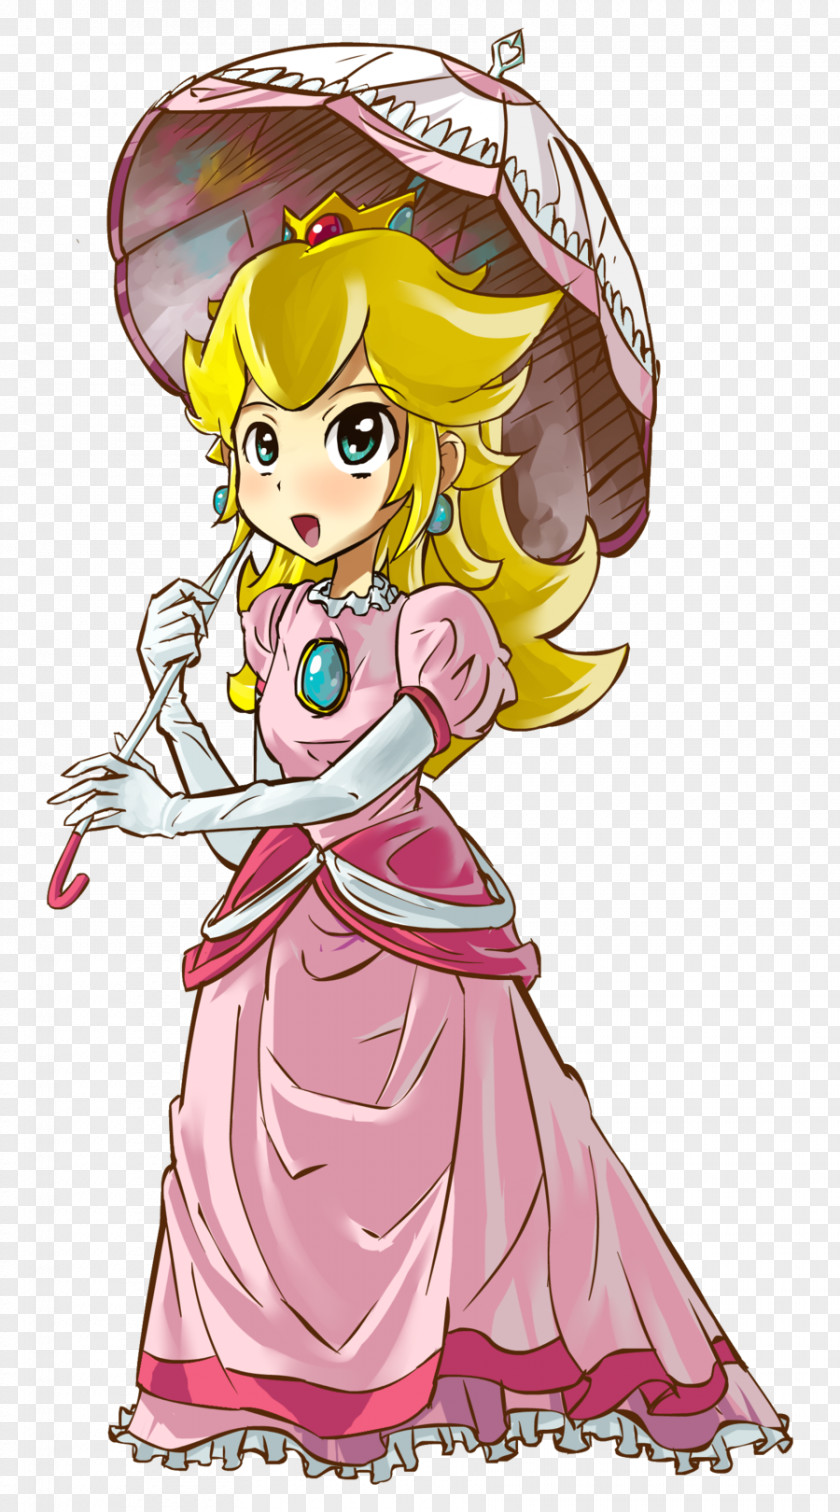 Mario Super Princess Peach DeviantArt PNG